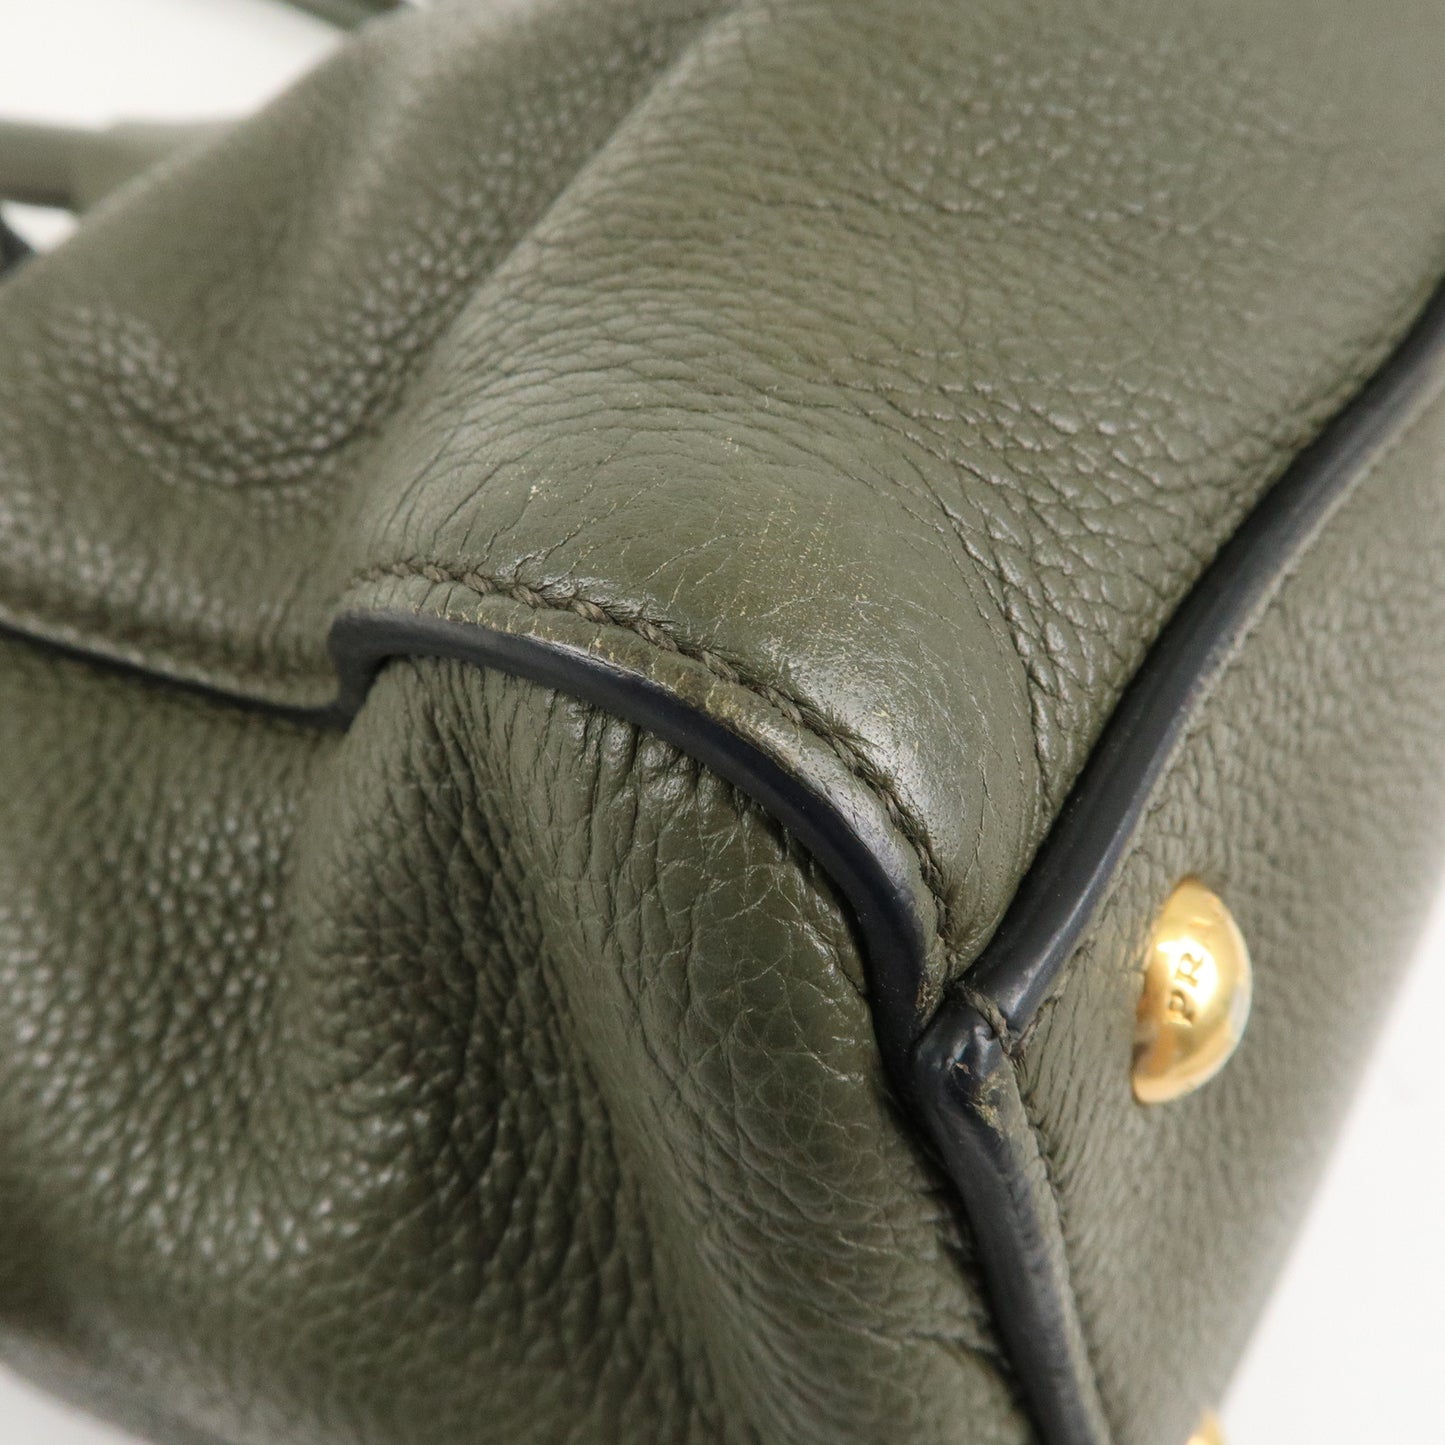 PRADA Logo Leather Hand Bag Shoulder Bag Khaki